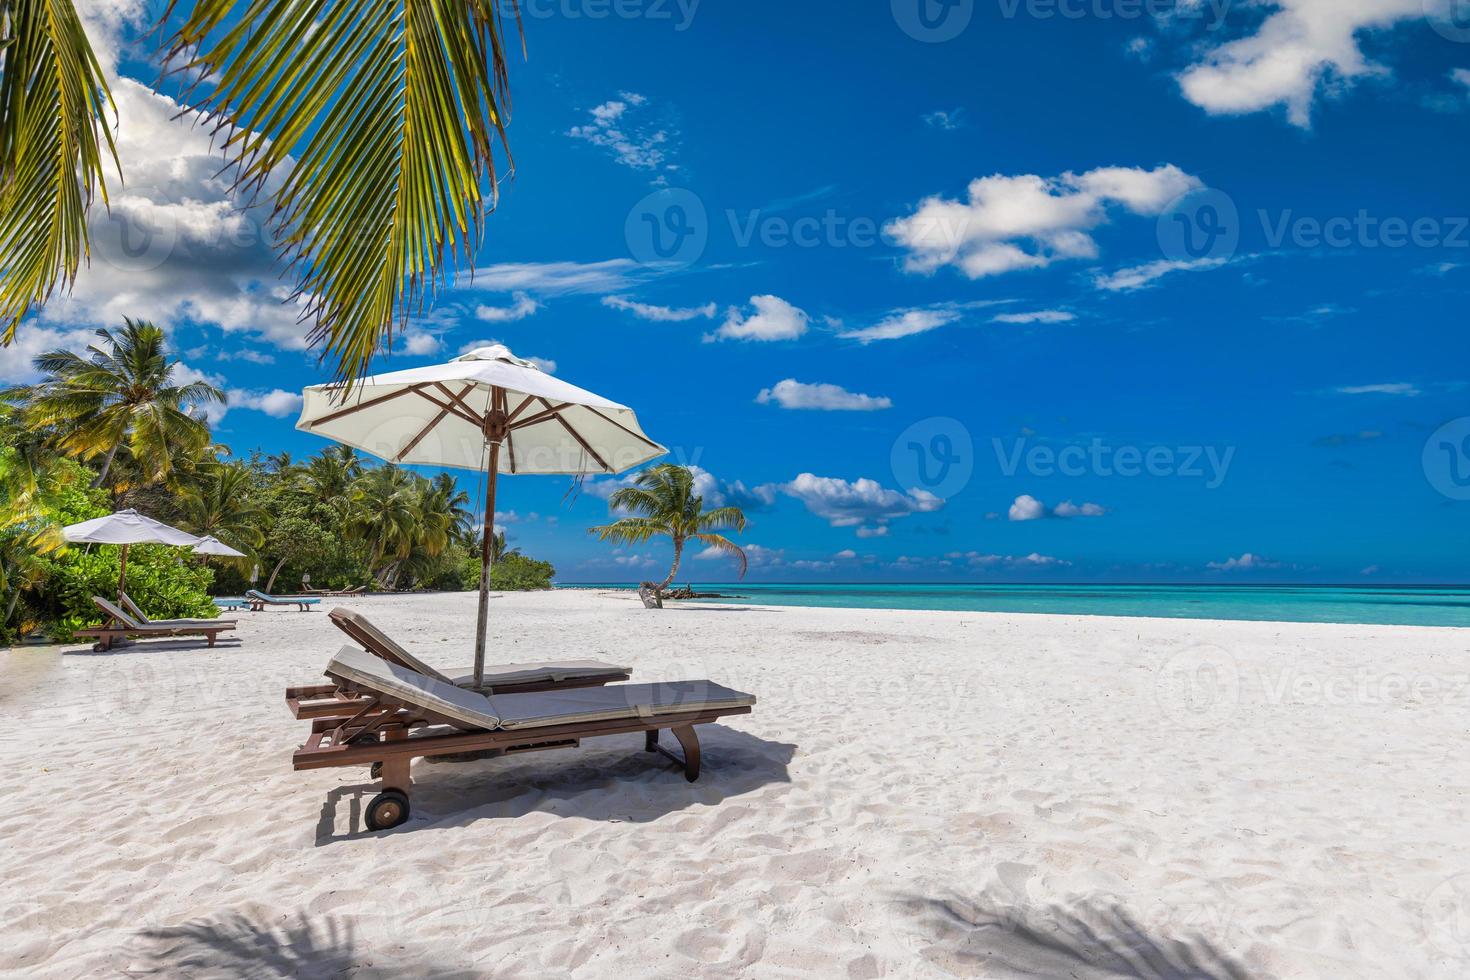 mooi tropisch landschap, paar stoelen zon bedden paraplu onder palm bladeren. zomer achtergrond, exotisch reizen strand, zonnig dag paradijs kust. verbazingwekkend landschap, zee zand lucht kom tot rust toevlucht vakantie foto